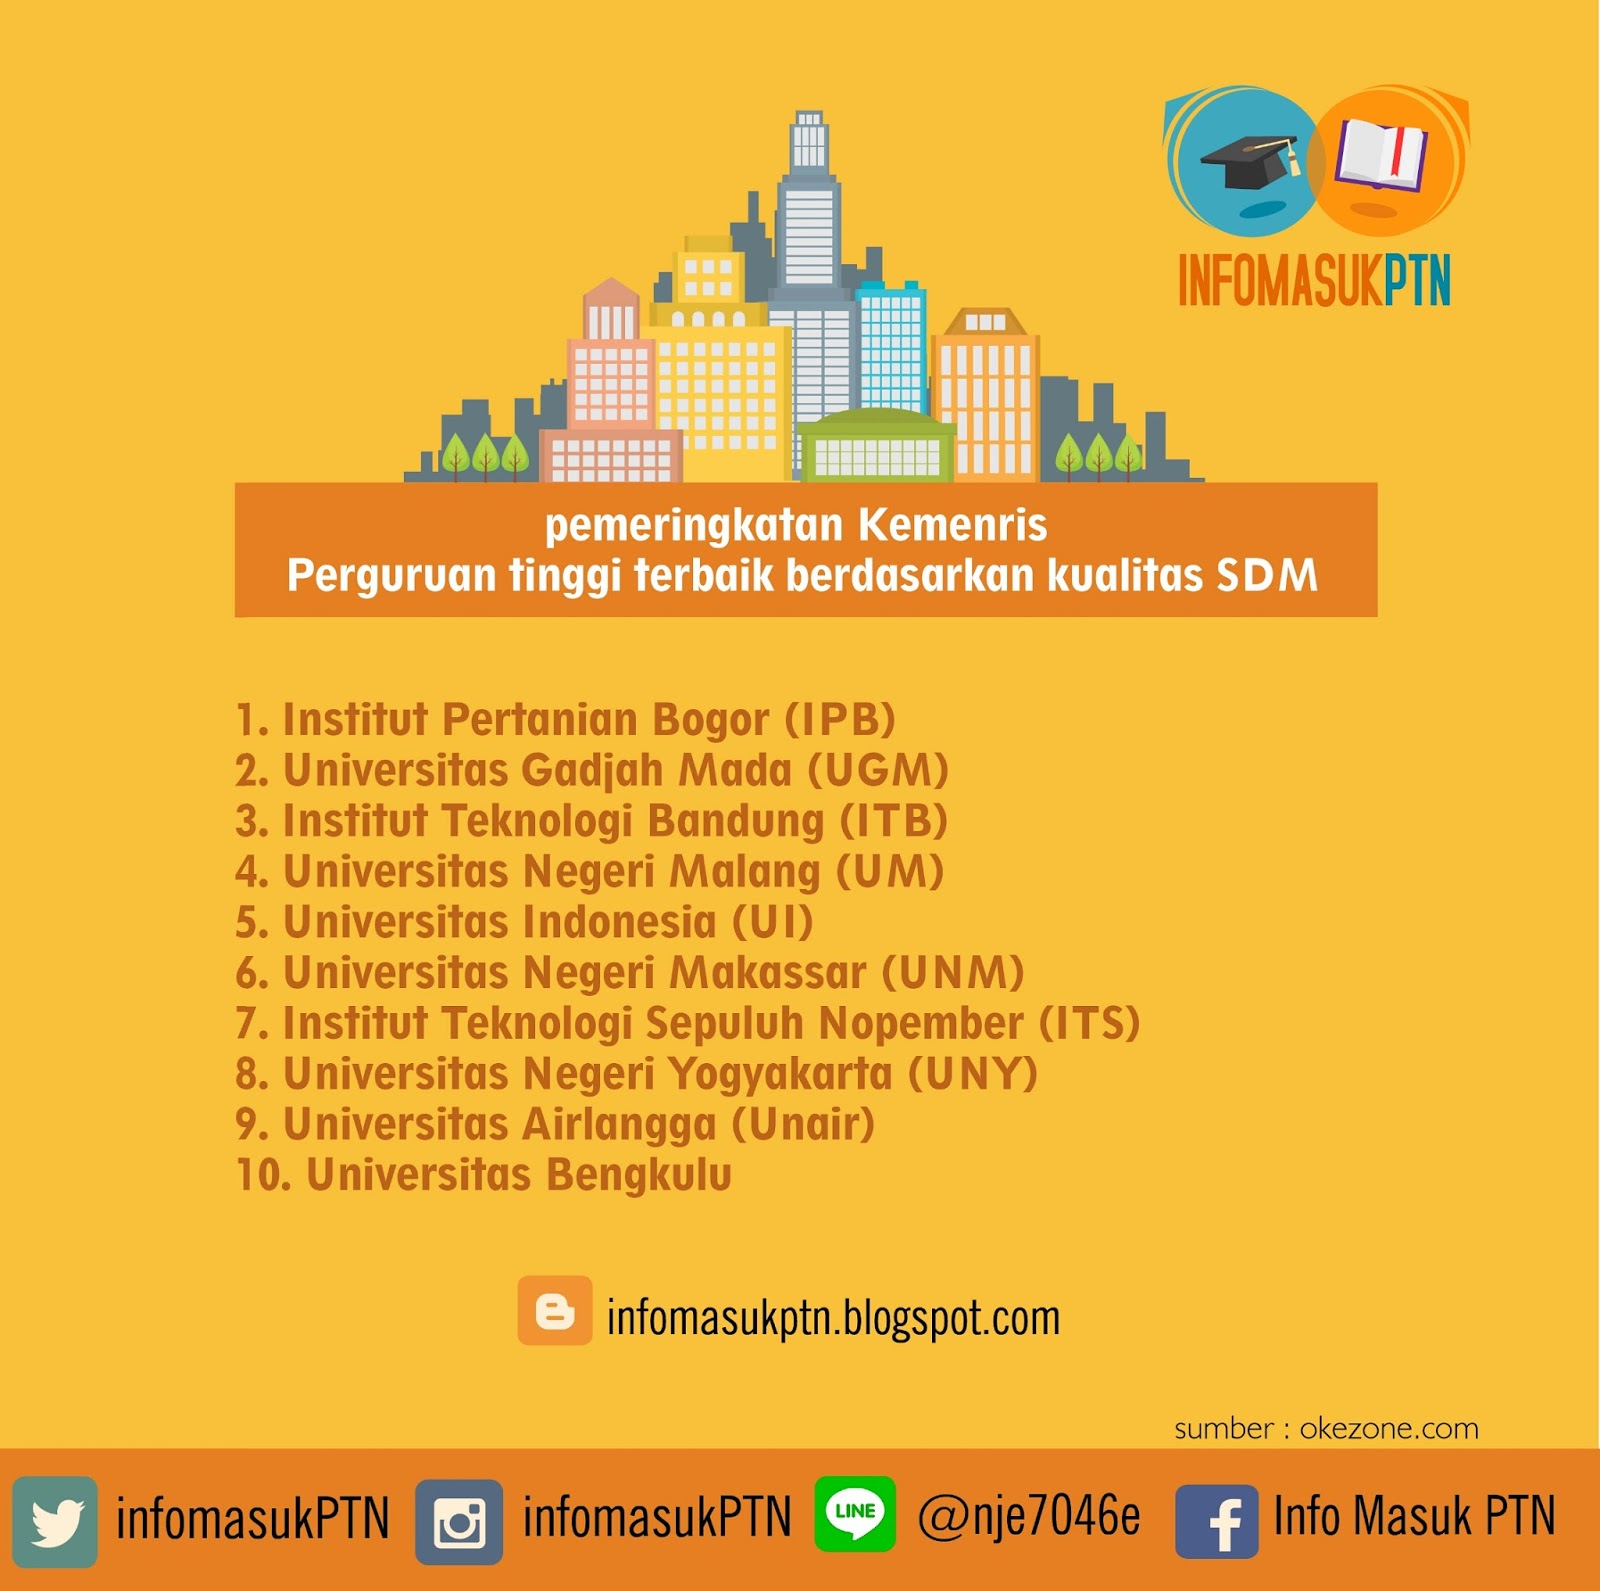 5 Universitas Indonesia UI 6 Universitas Negeri Makassar UNM 7 Institut Teknologi Sepuluh Nopember ITS 8 Universitas Negeri Yogyakarta UNY